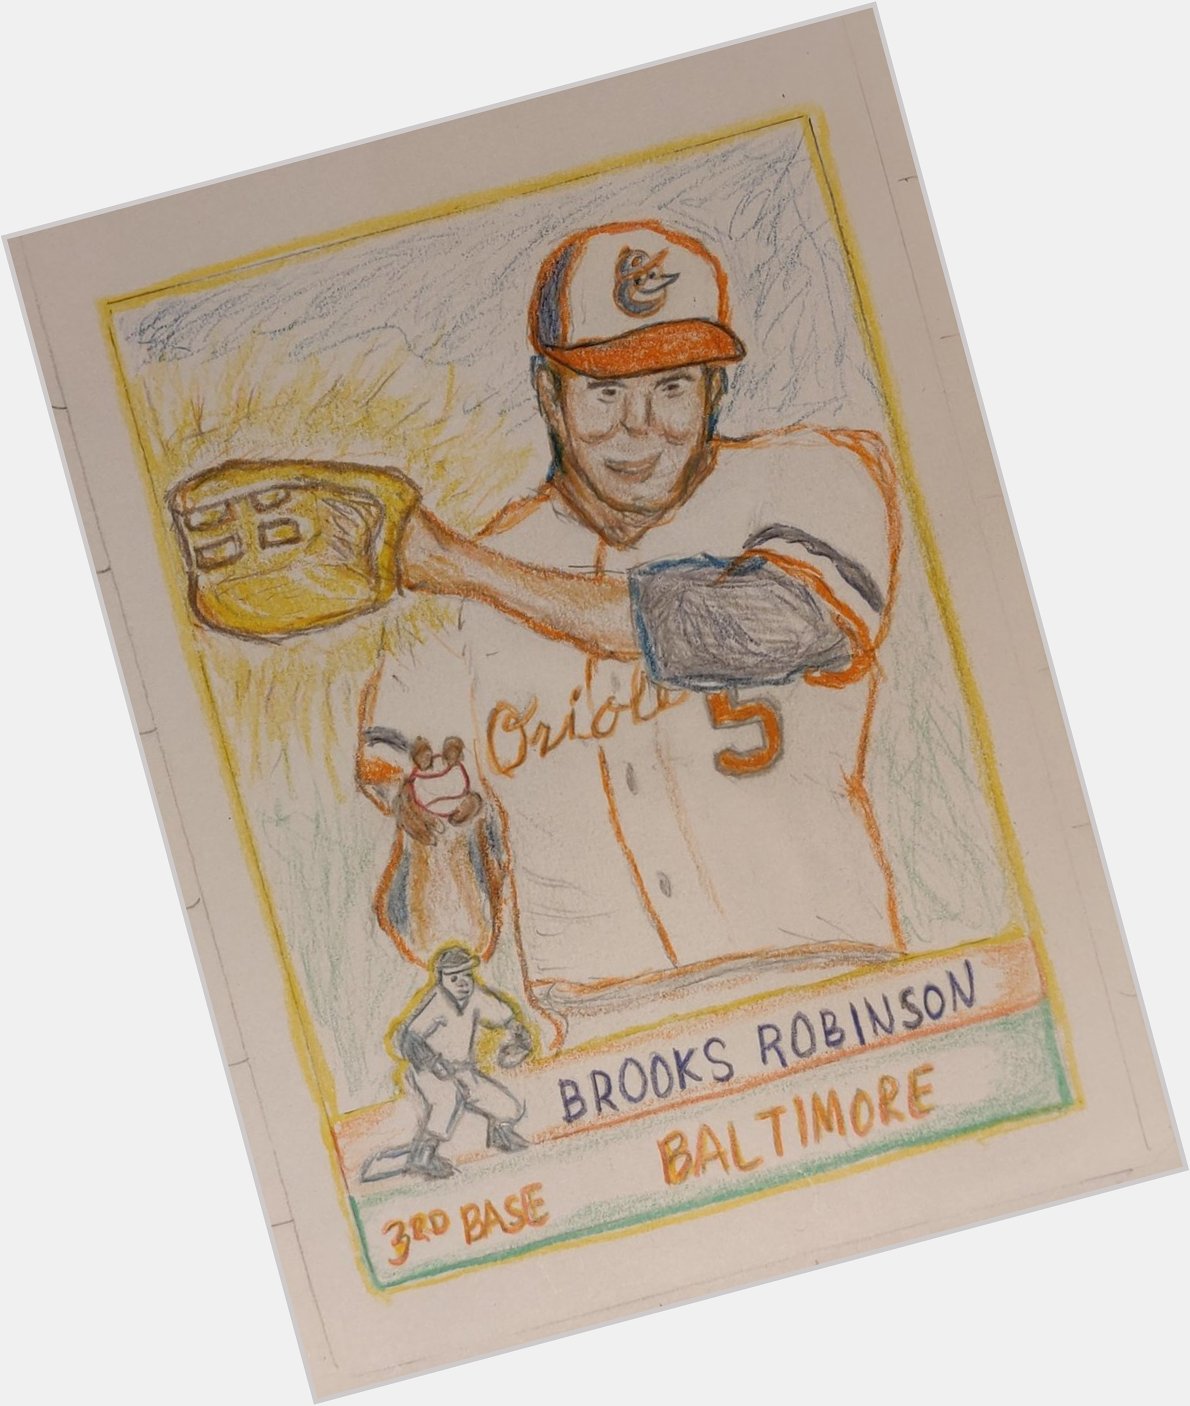 Happy 85th Birthday 1976T Brooks Robinson Gold Glove Variation. 